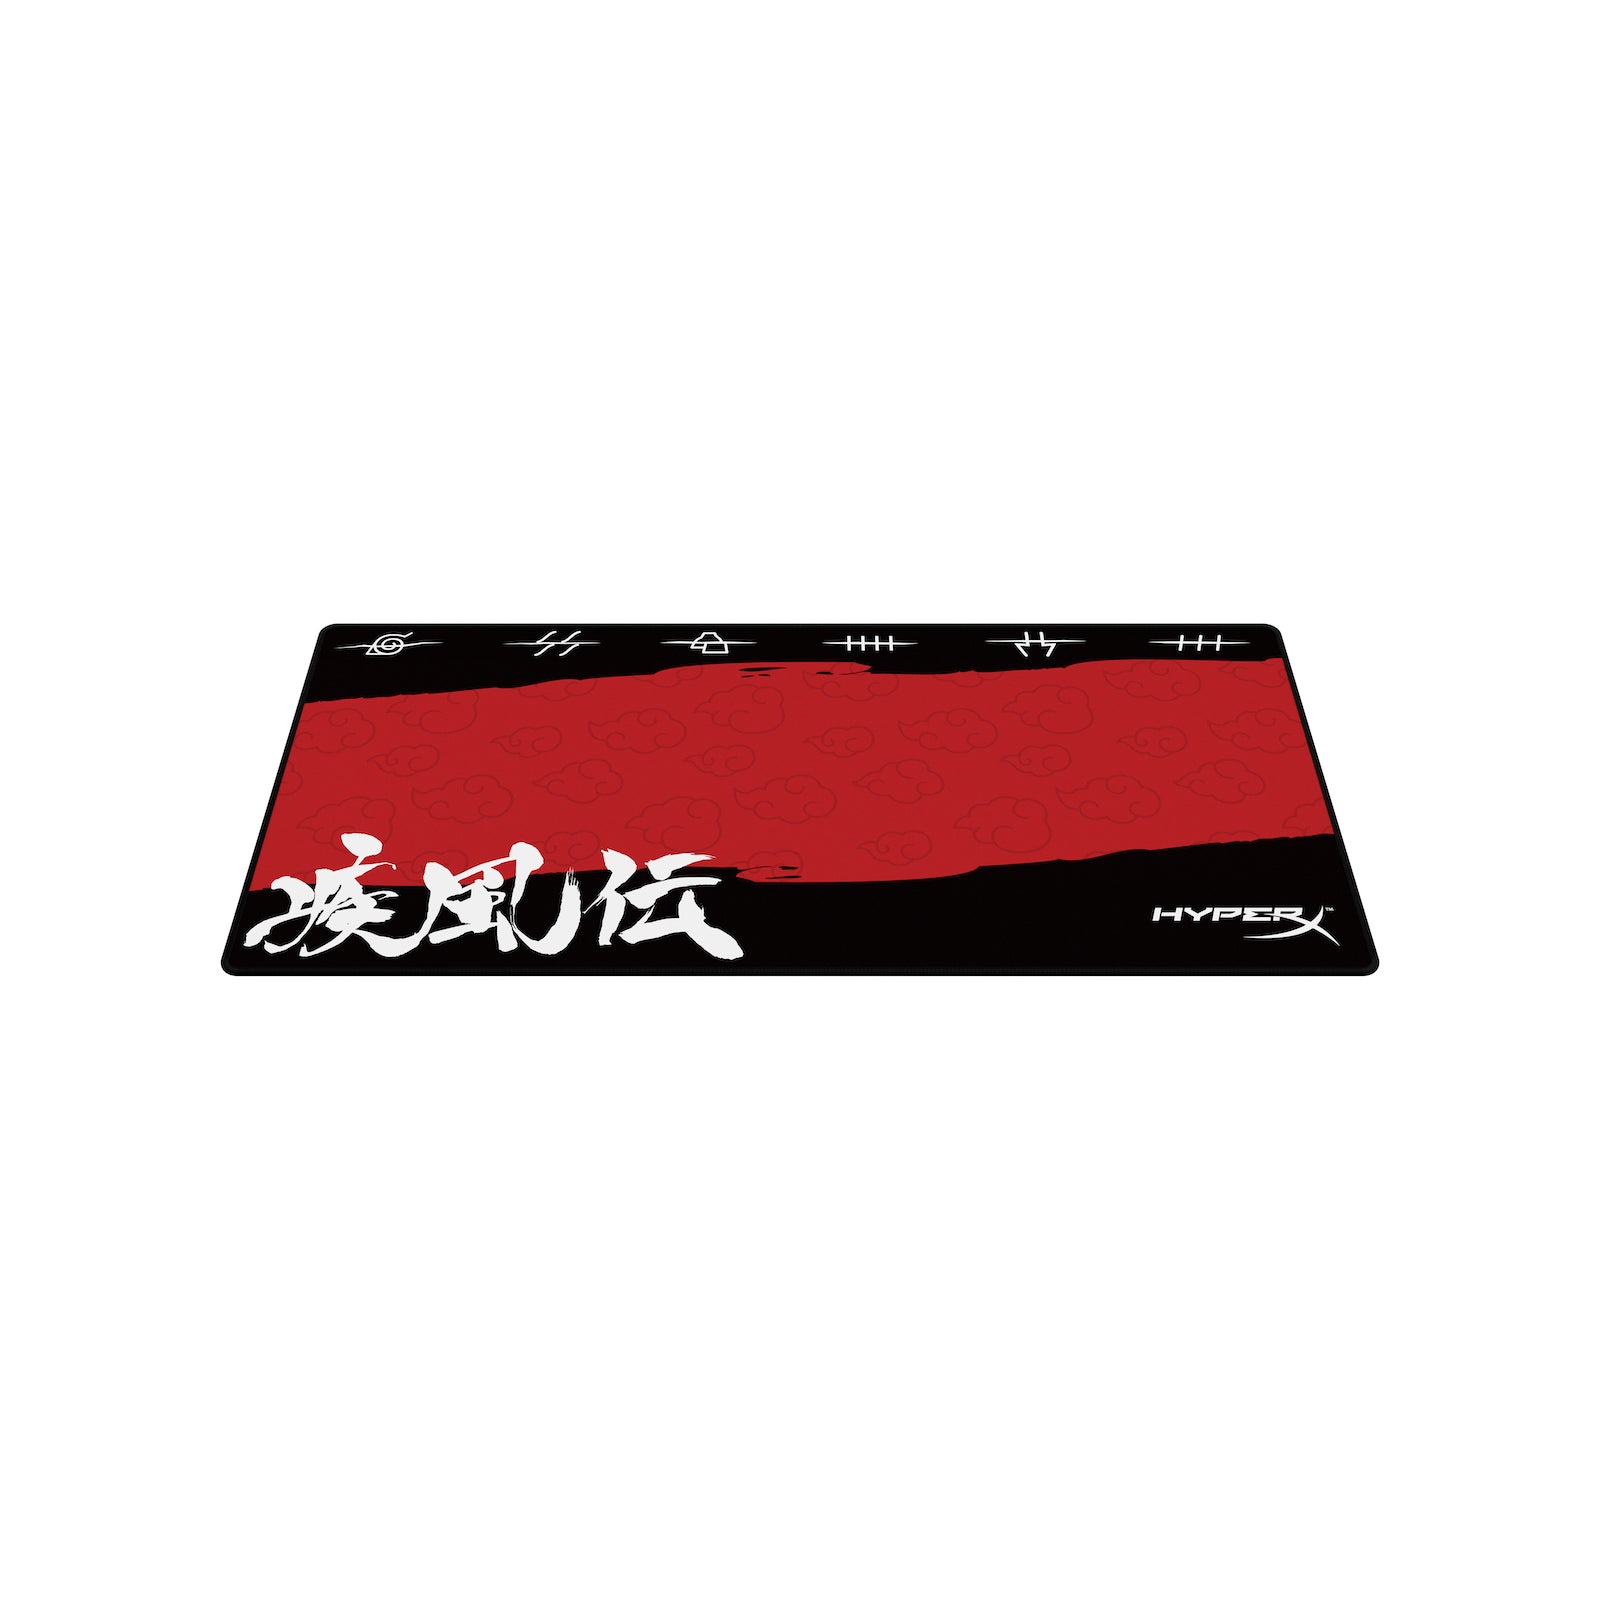 HyperX Pulsefire Mat - Itachi Edition - Gaming Mouse Pad